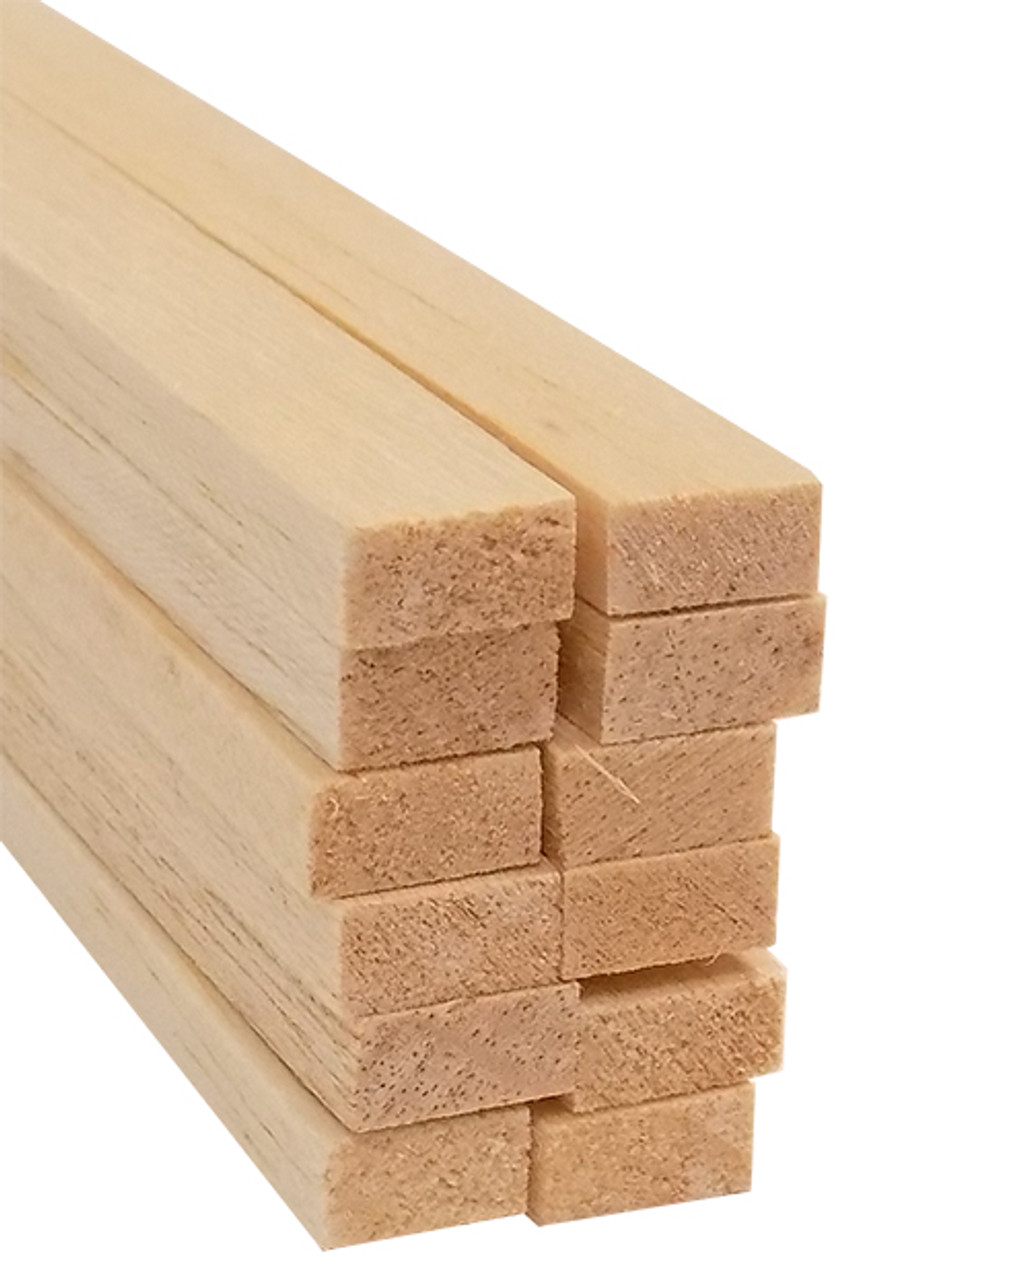 Balsa Wood Block, 2 x 3 x 12